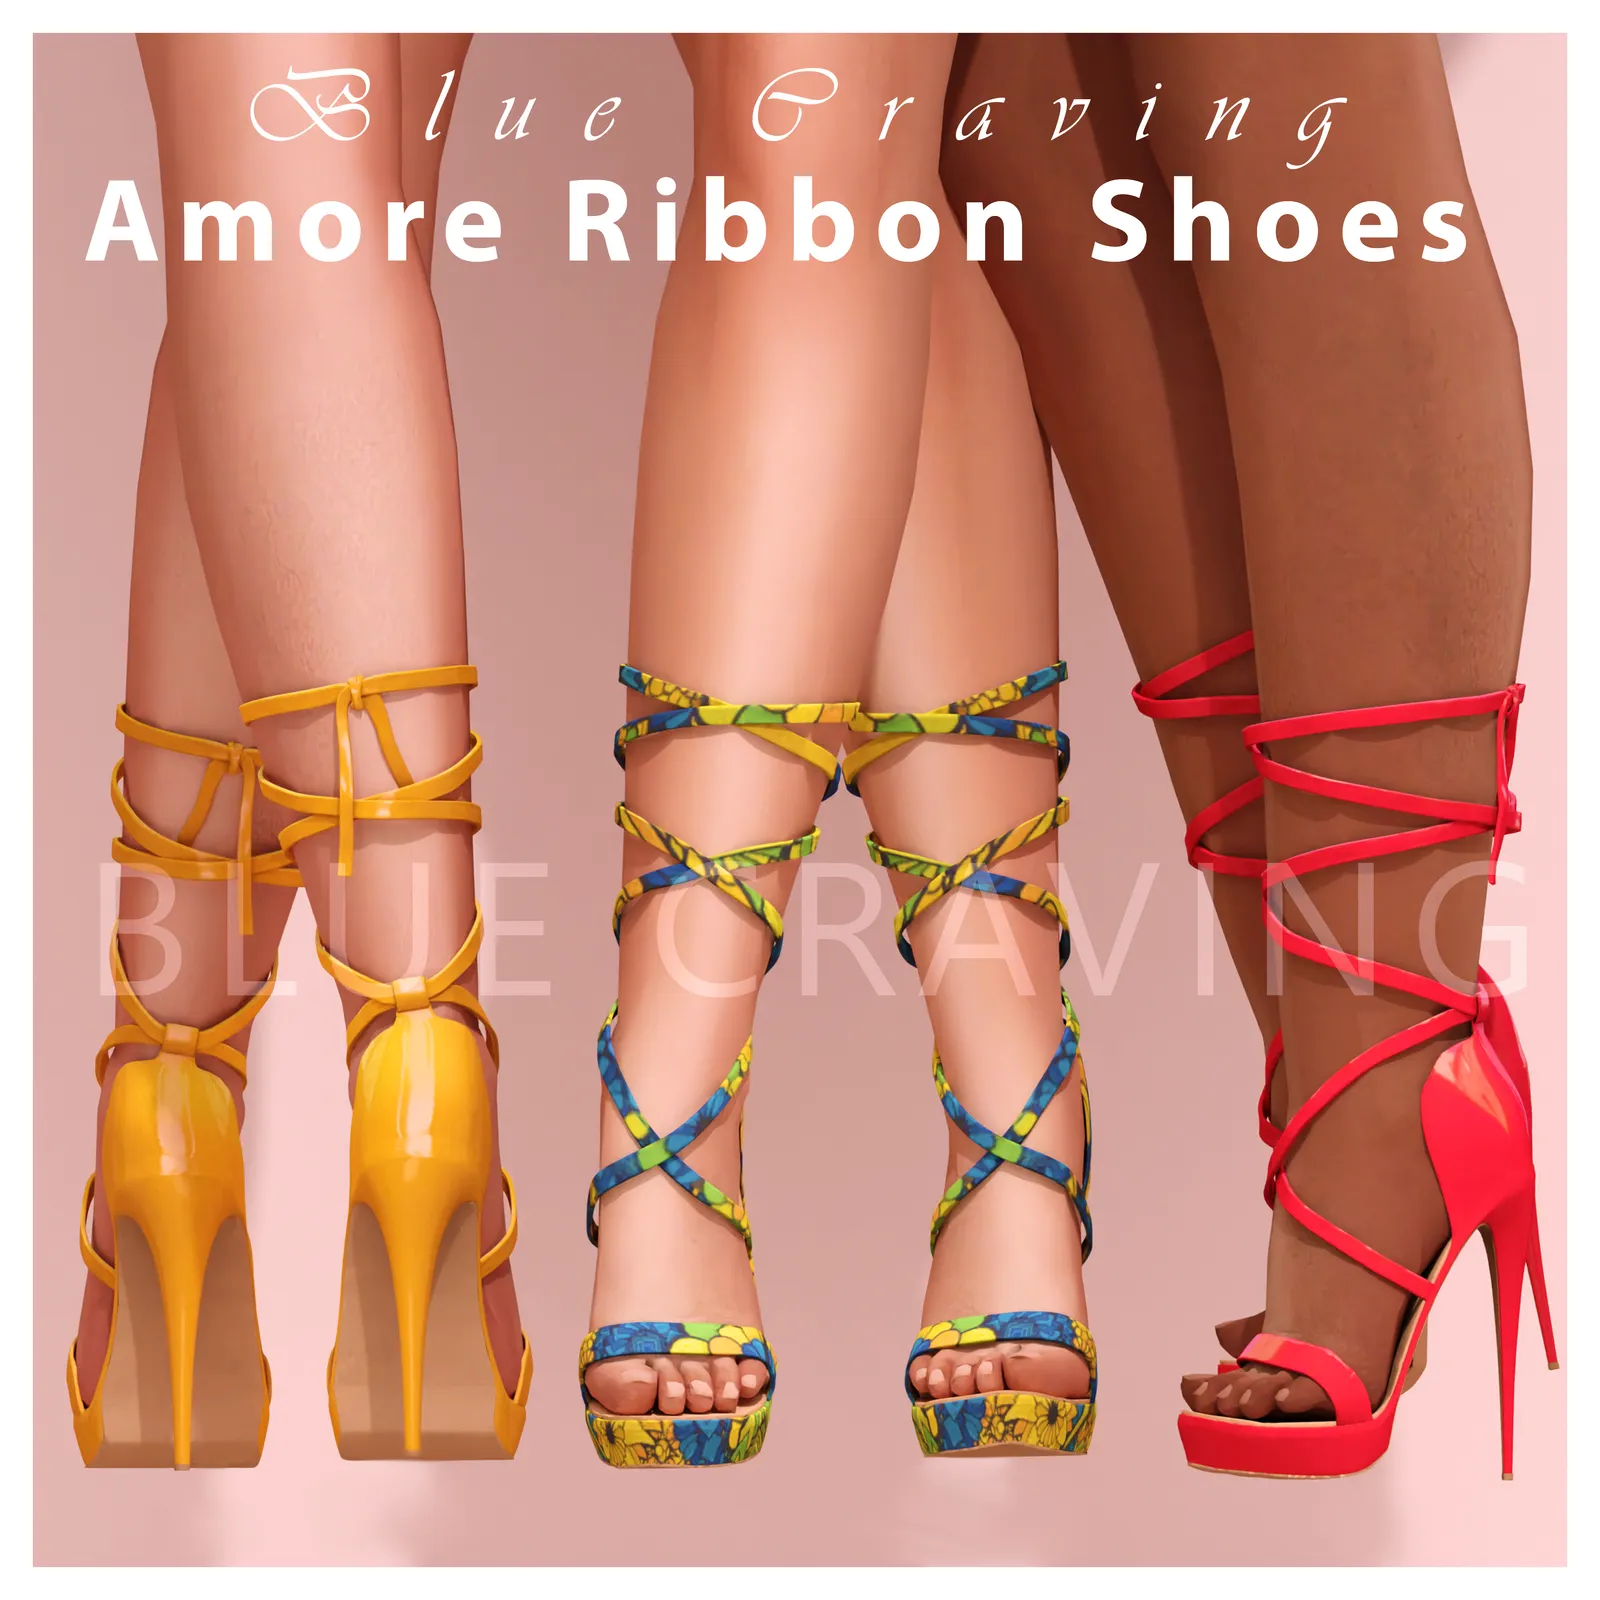 Amore Ribbon Shoes